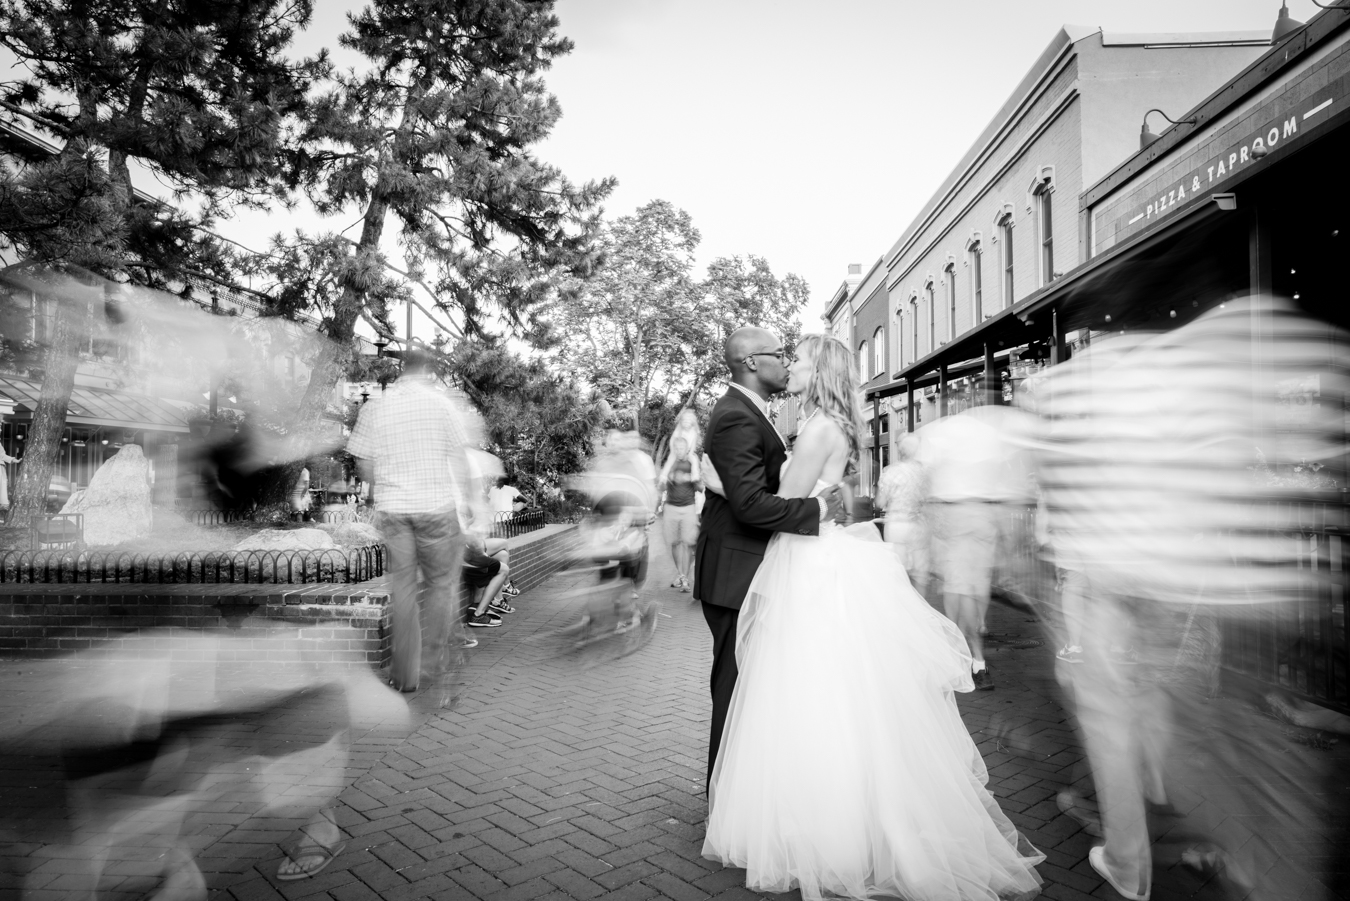 boulder-pearl-st-wedding-photos-motion-blur